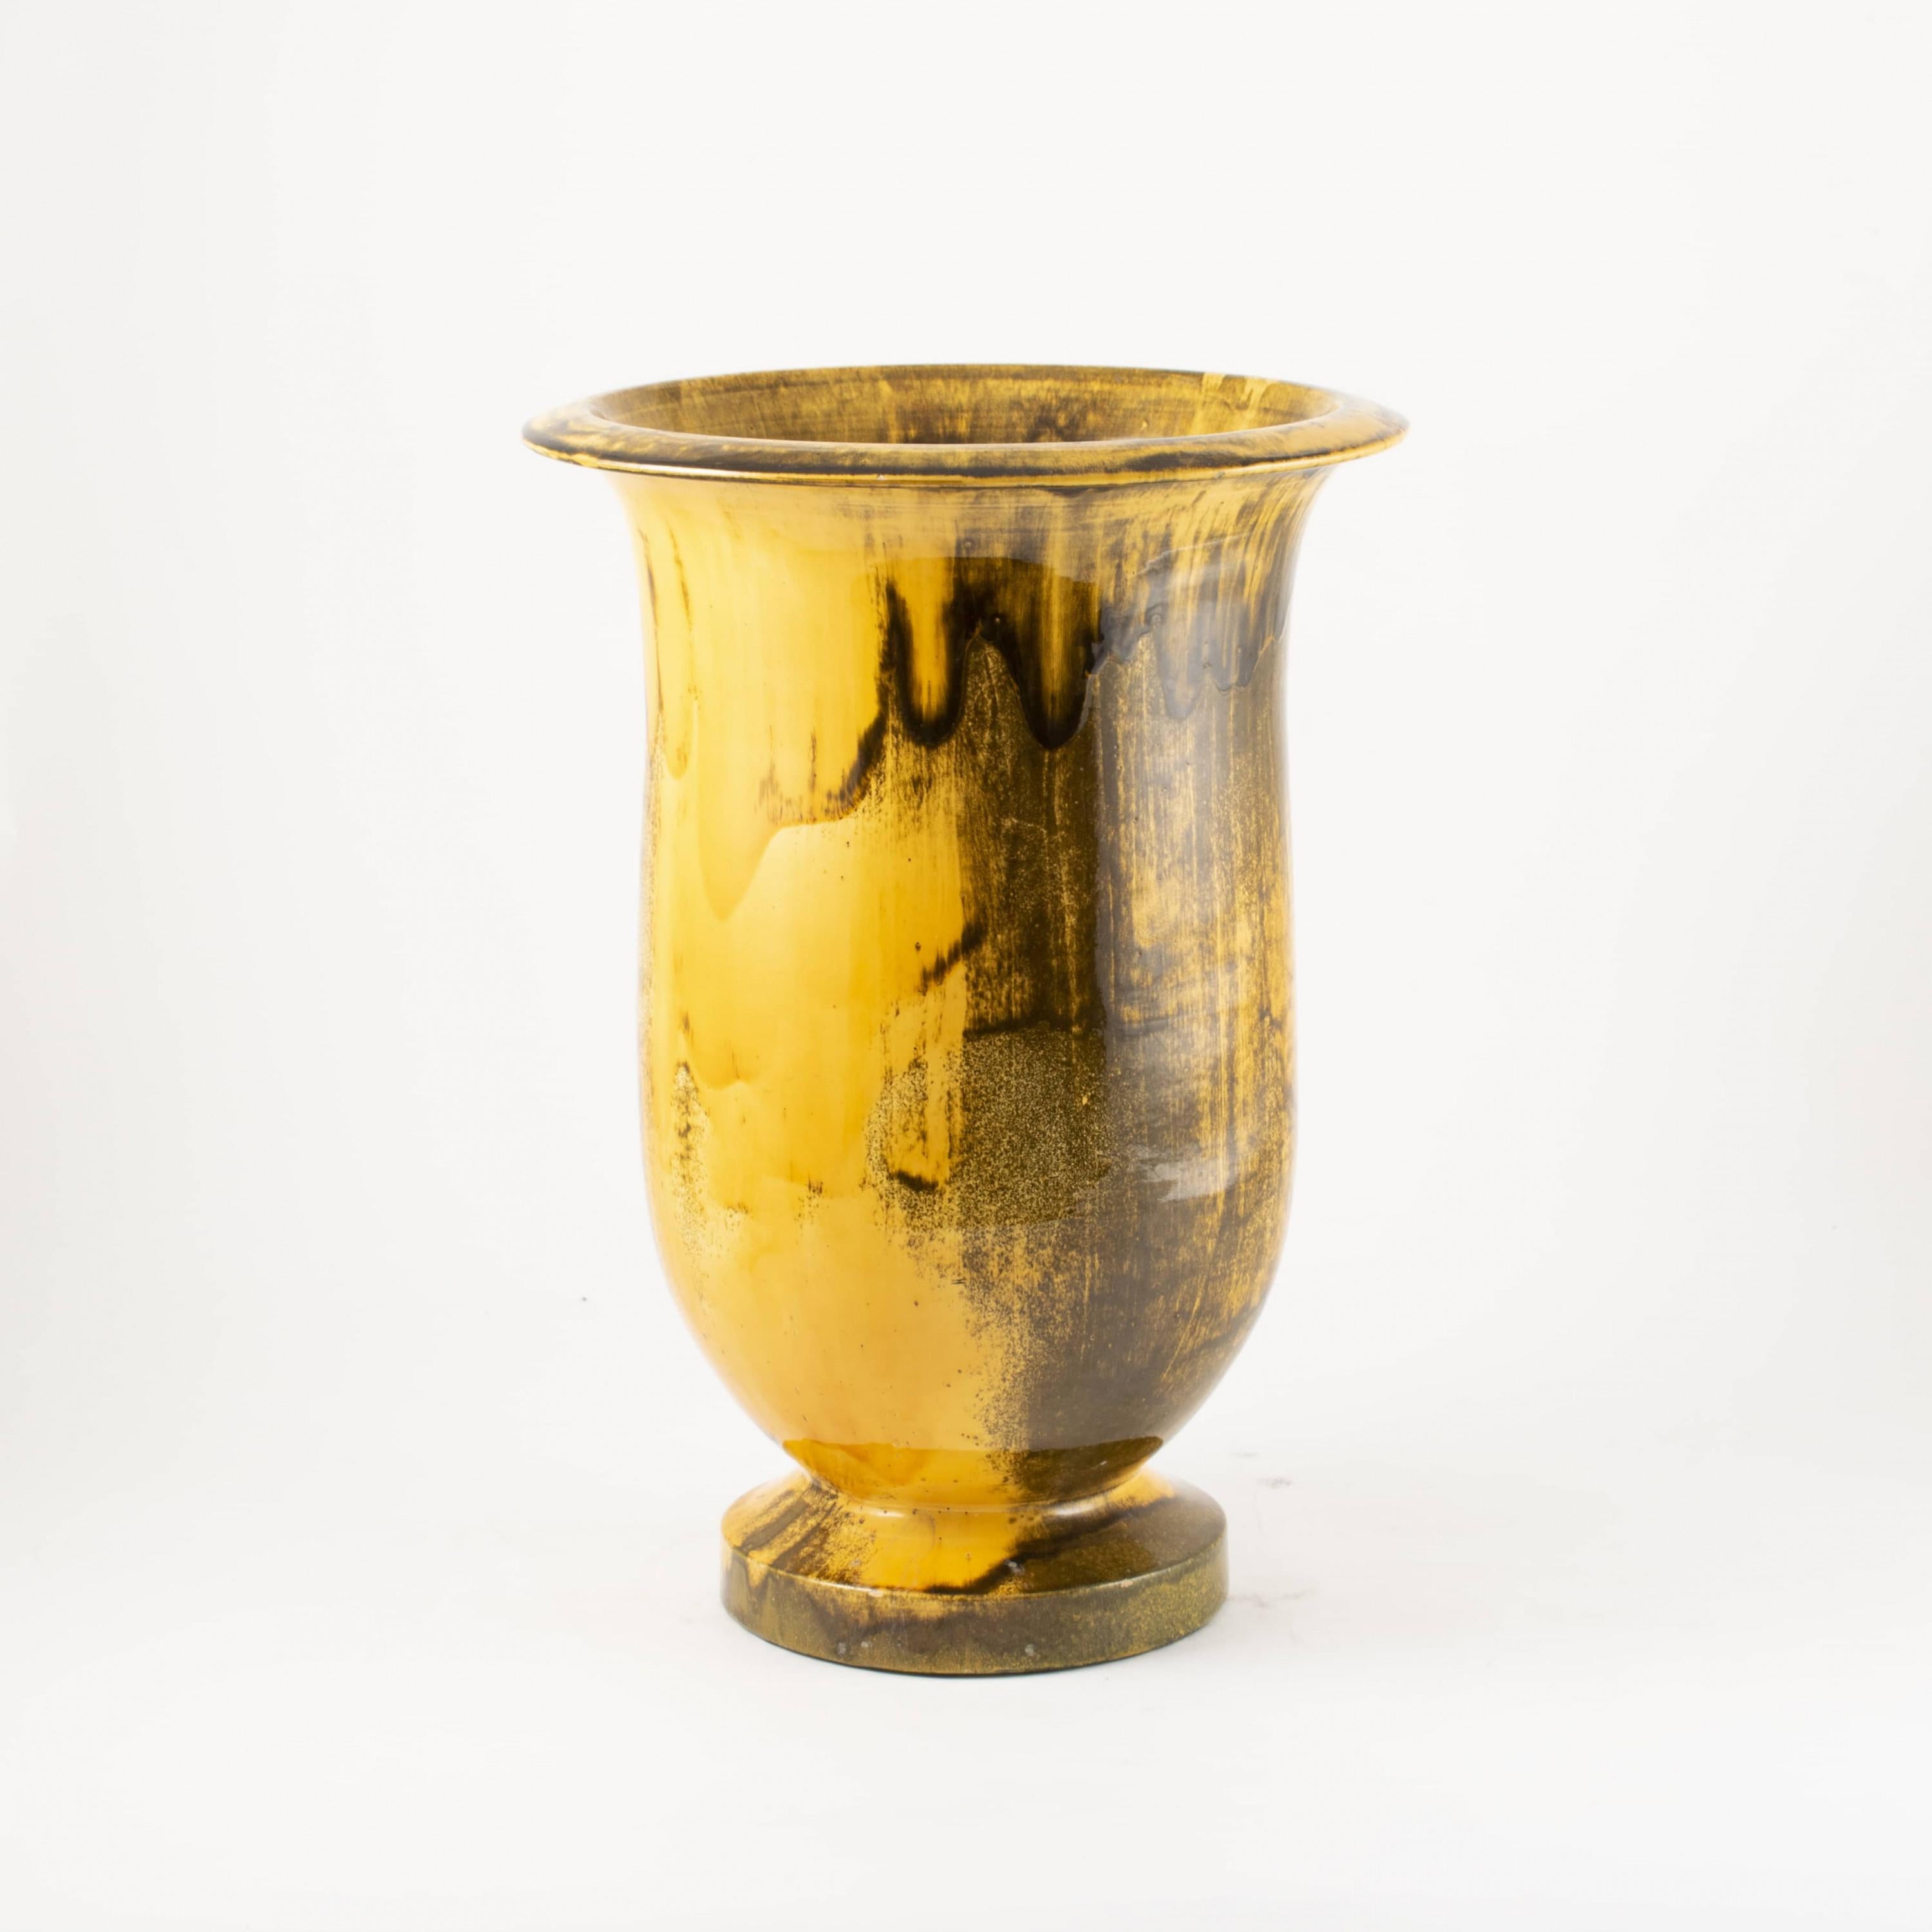 Scandinavian Modern Large Kähler Floor Vase in Yellow and Dark Glaze